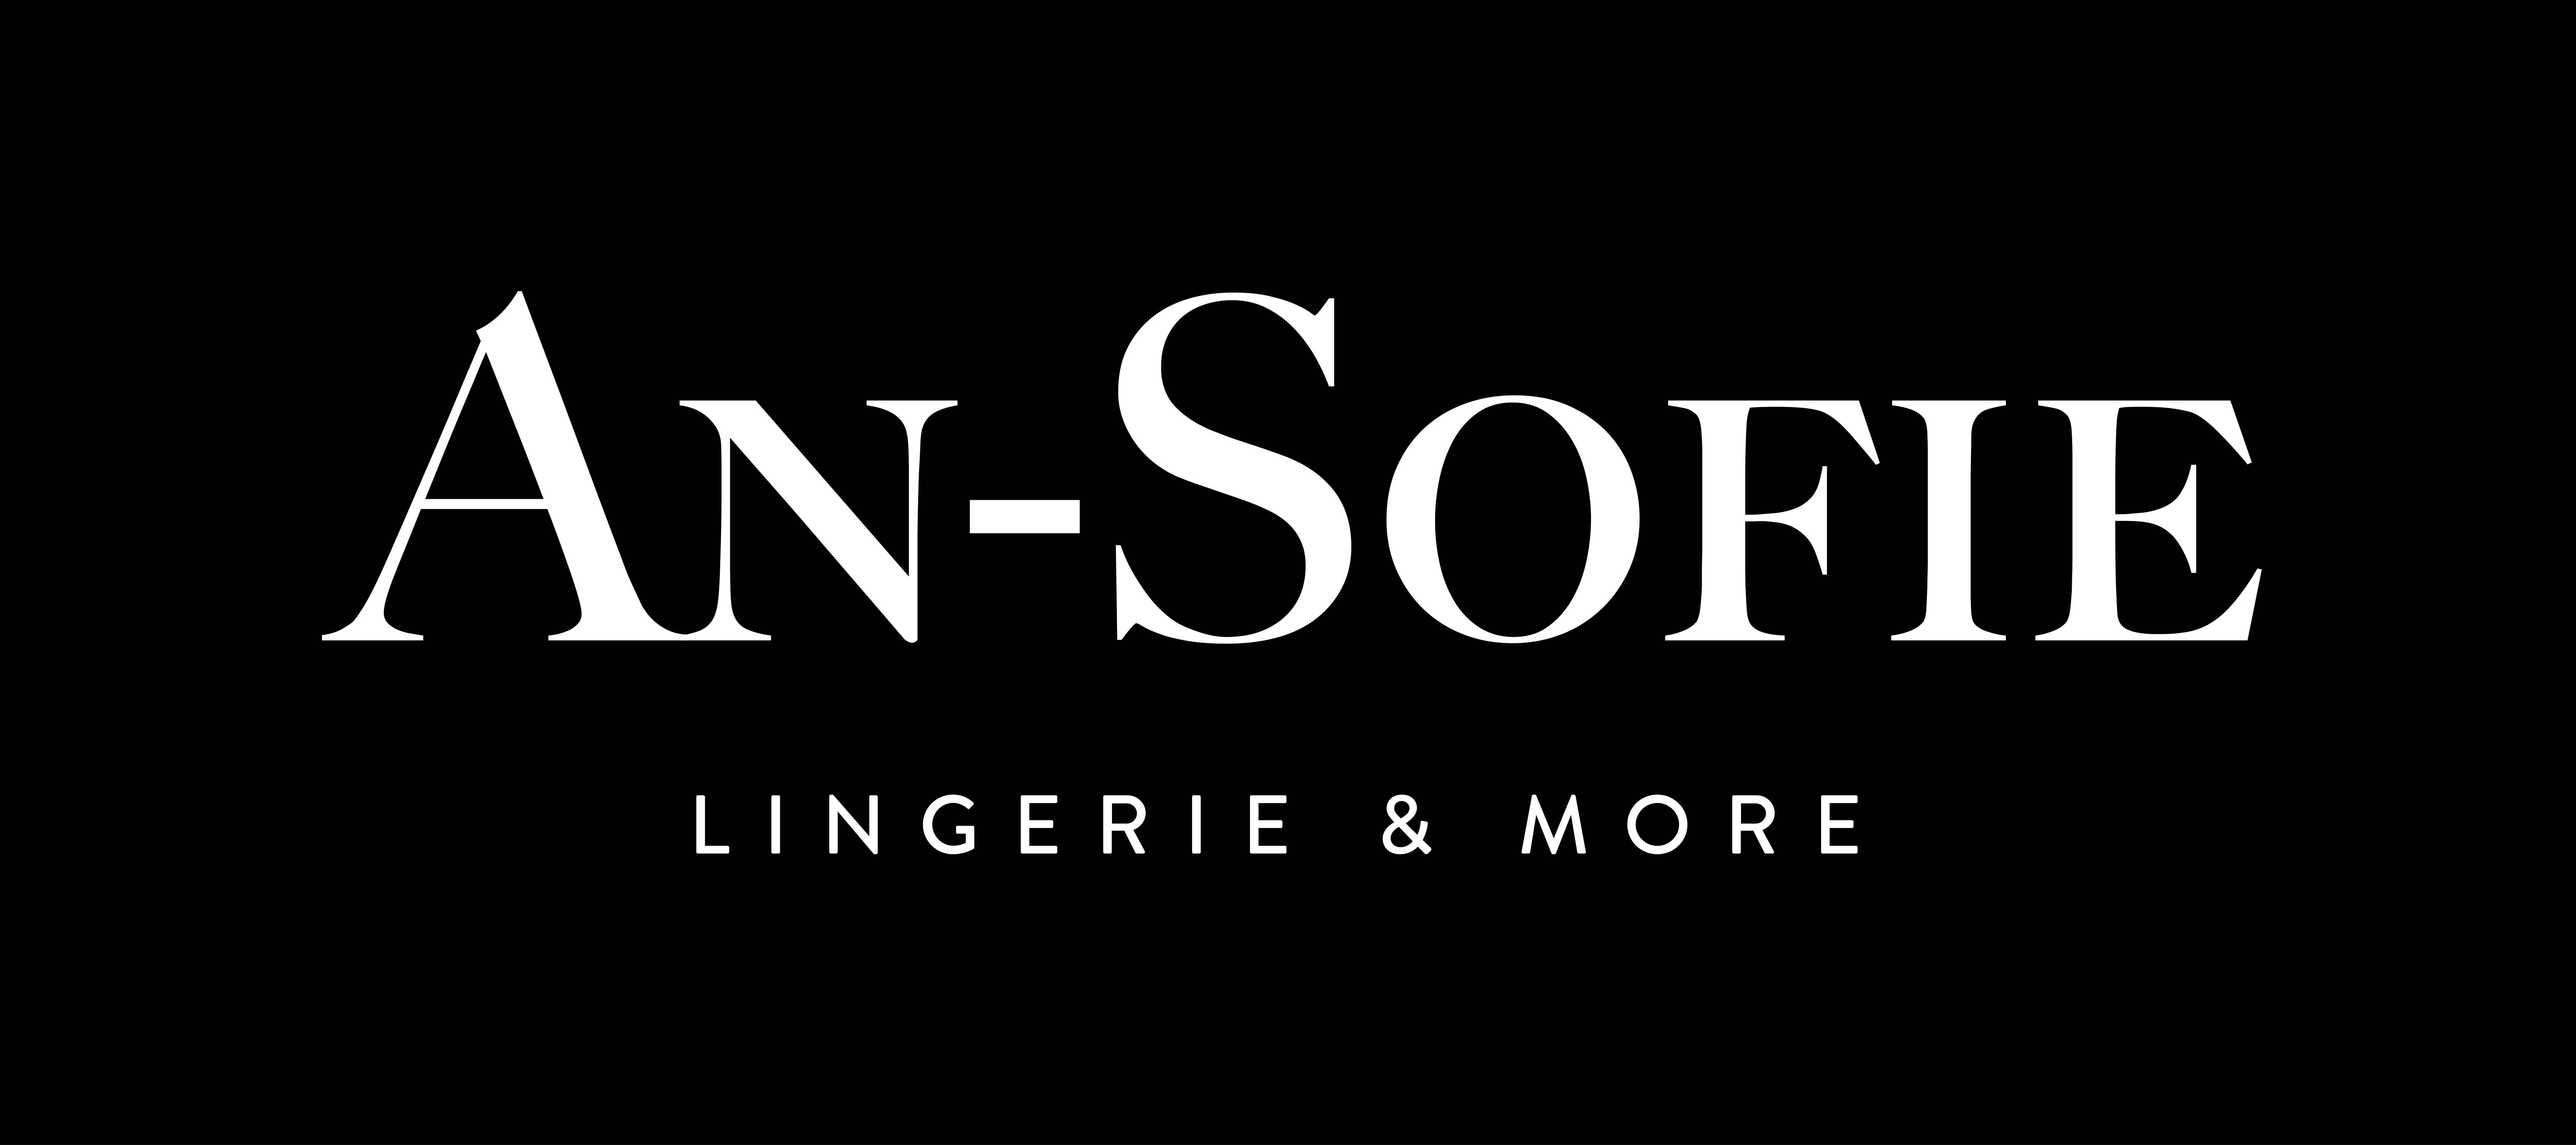 Lingerie An-Sofie logo